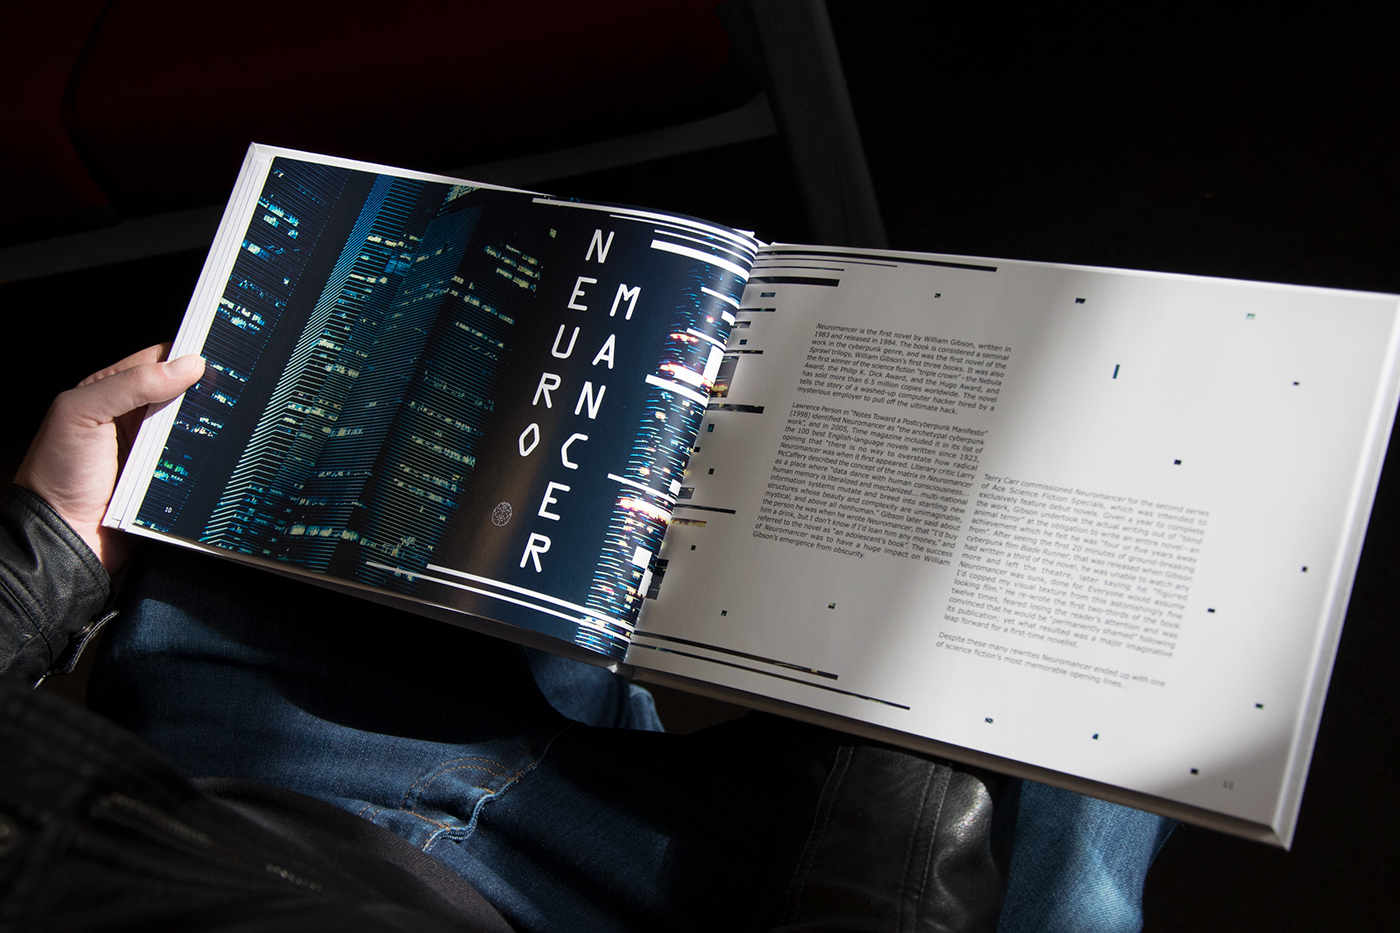 william gibson Neuromancer science fiction Cyberpunk book the matrix future Scifi Technology adobeawards